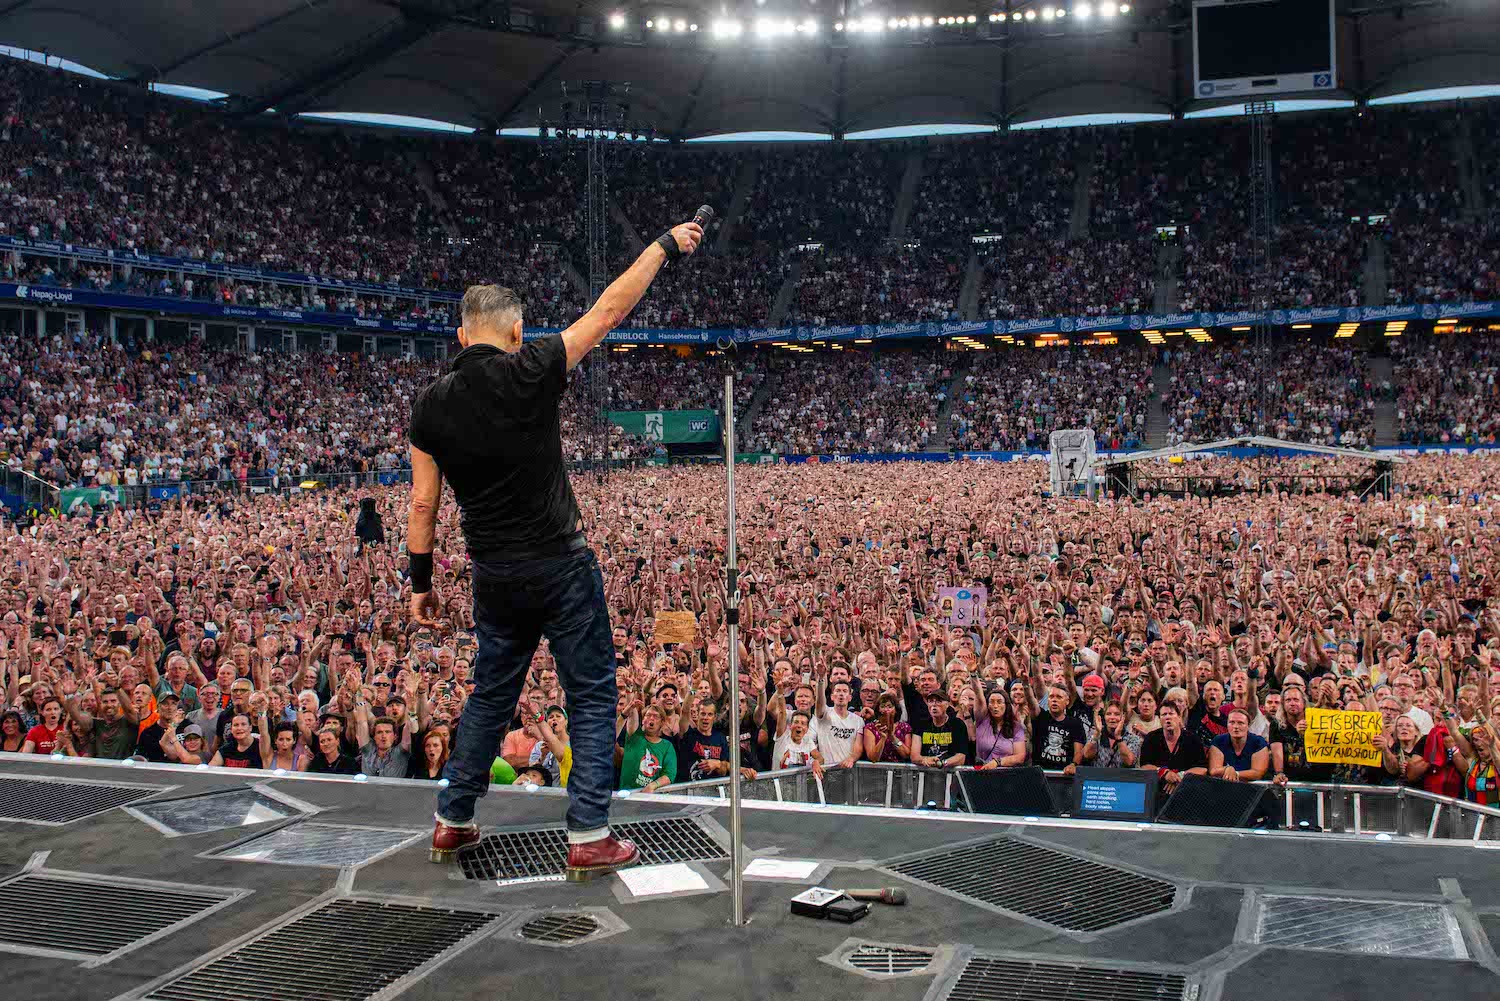 Bruce Springsteen & E Street Band at Volksparkstadion, Hamburg, Germany on July 15, 2023.